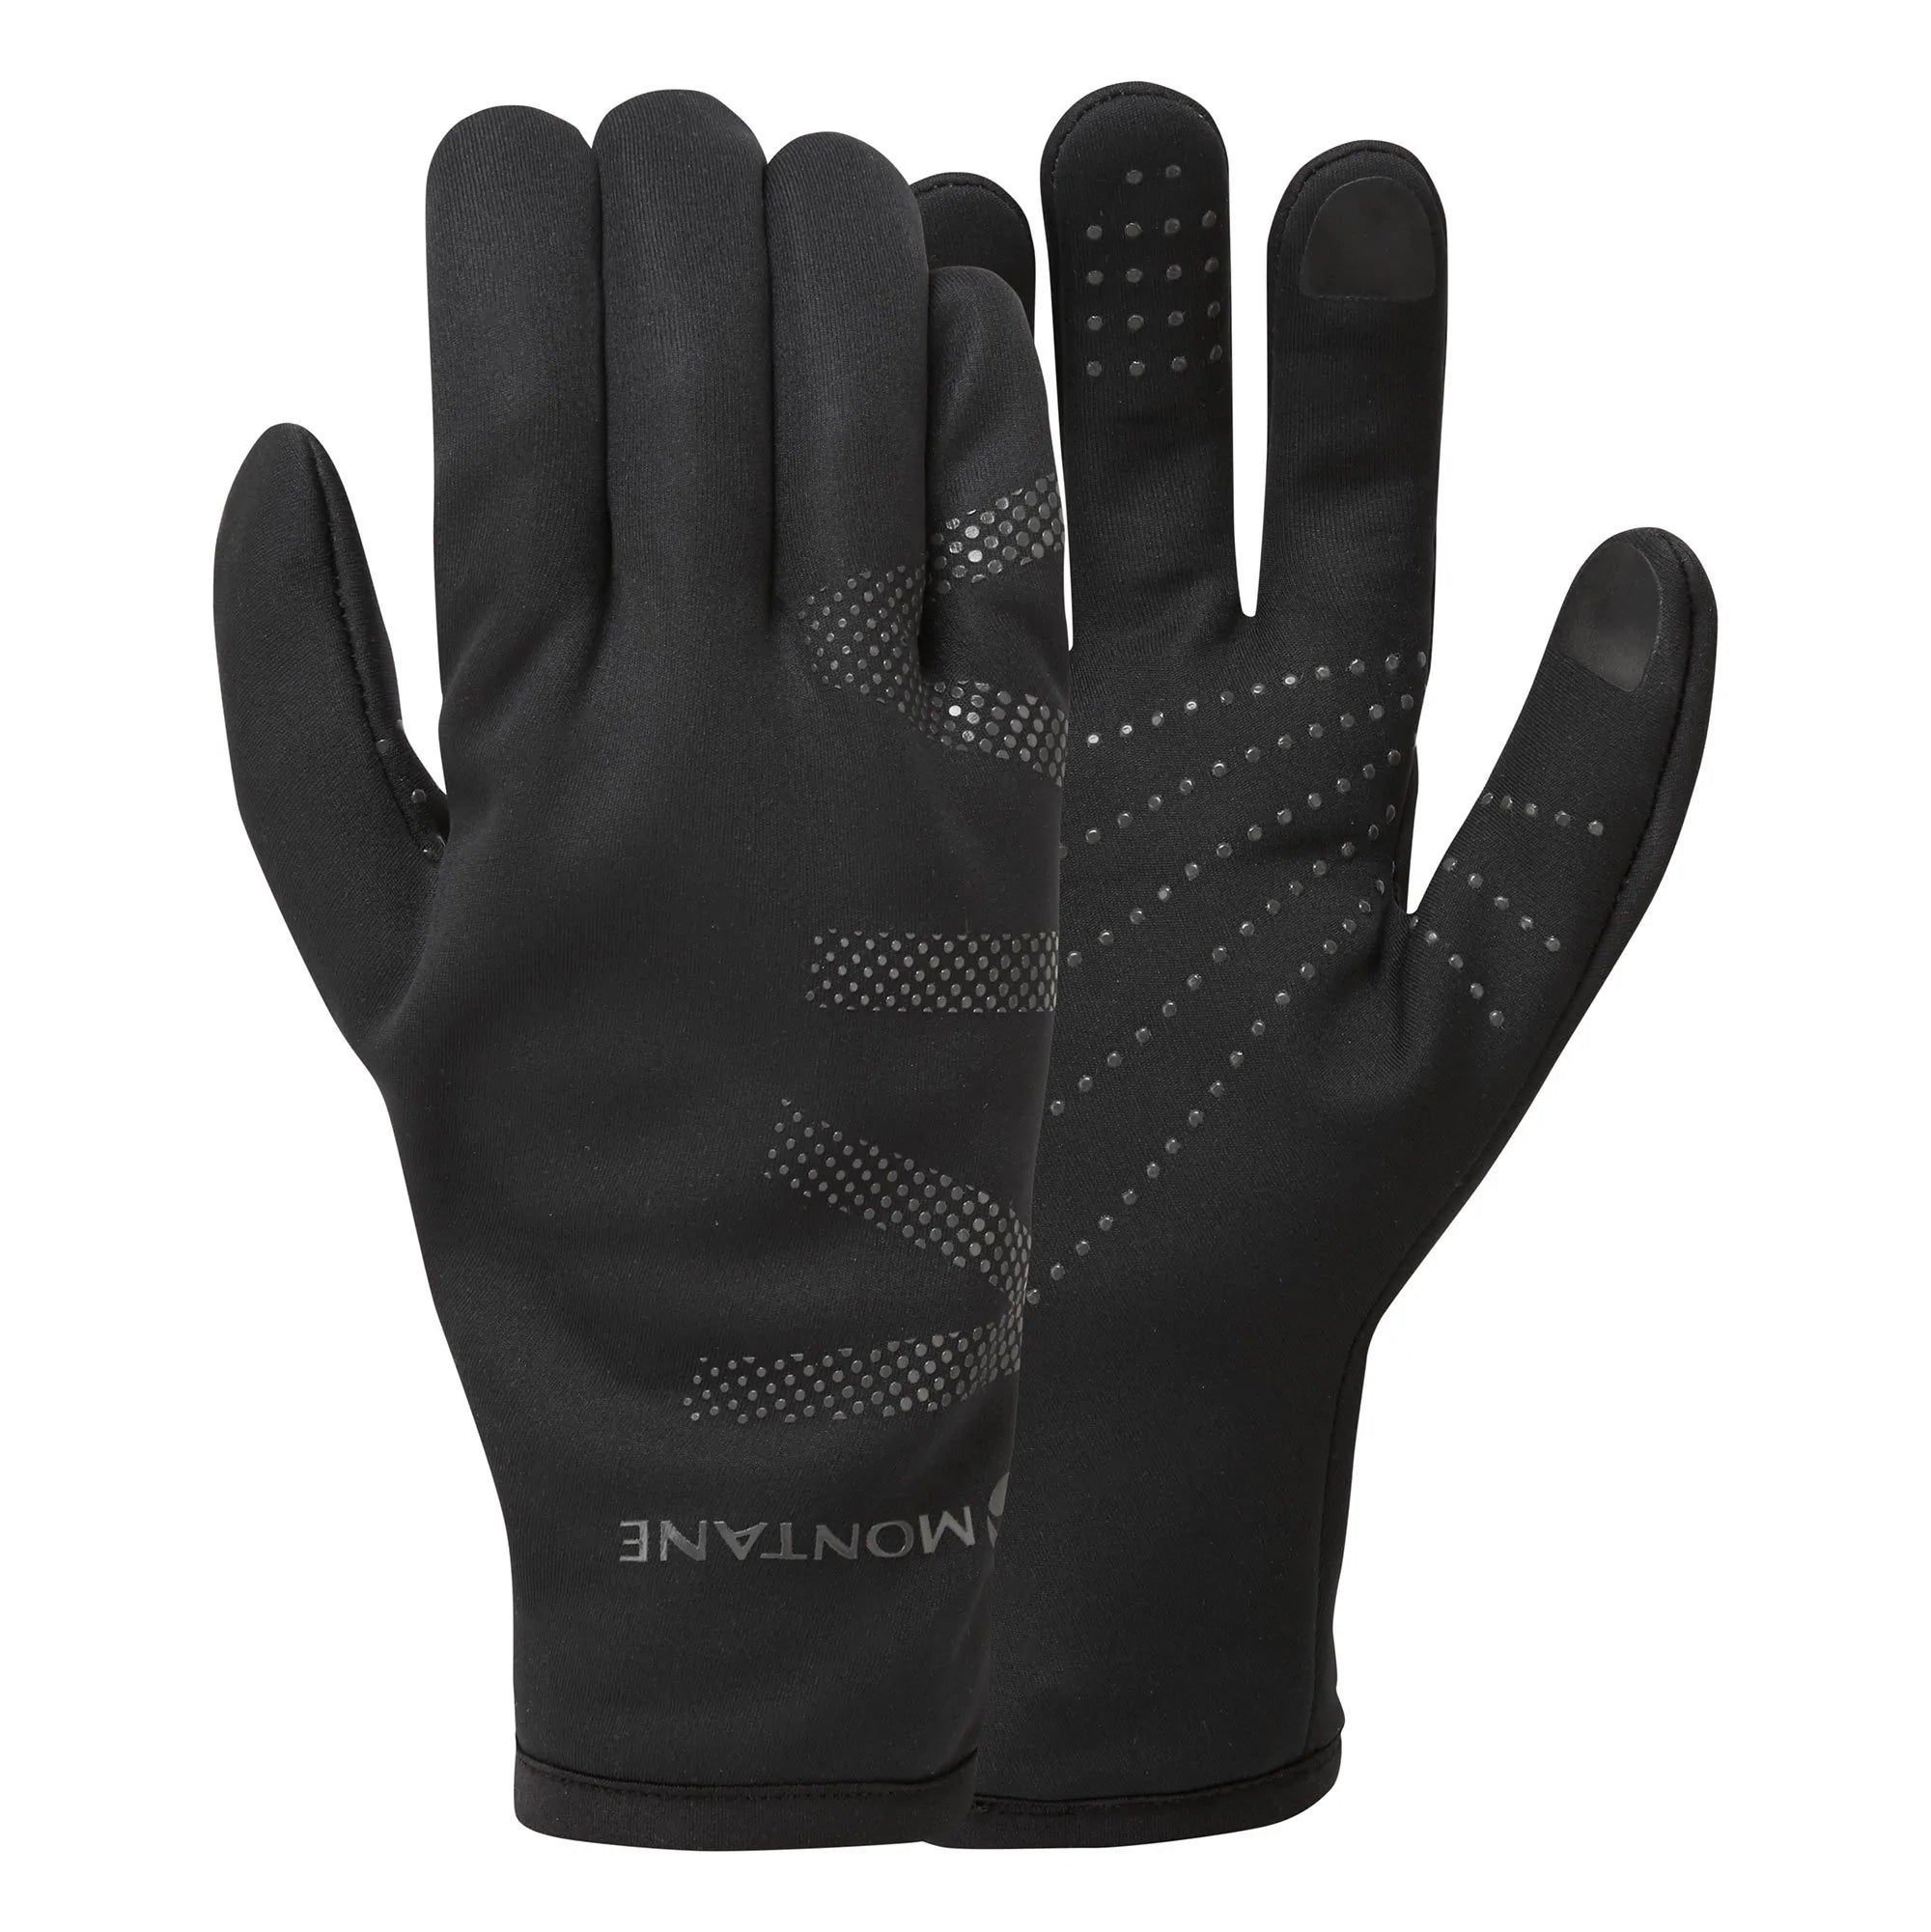 MONTANE VIA Groove Gloves